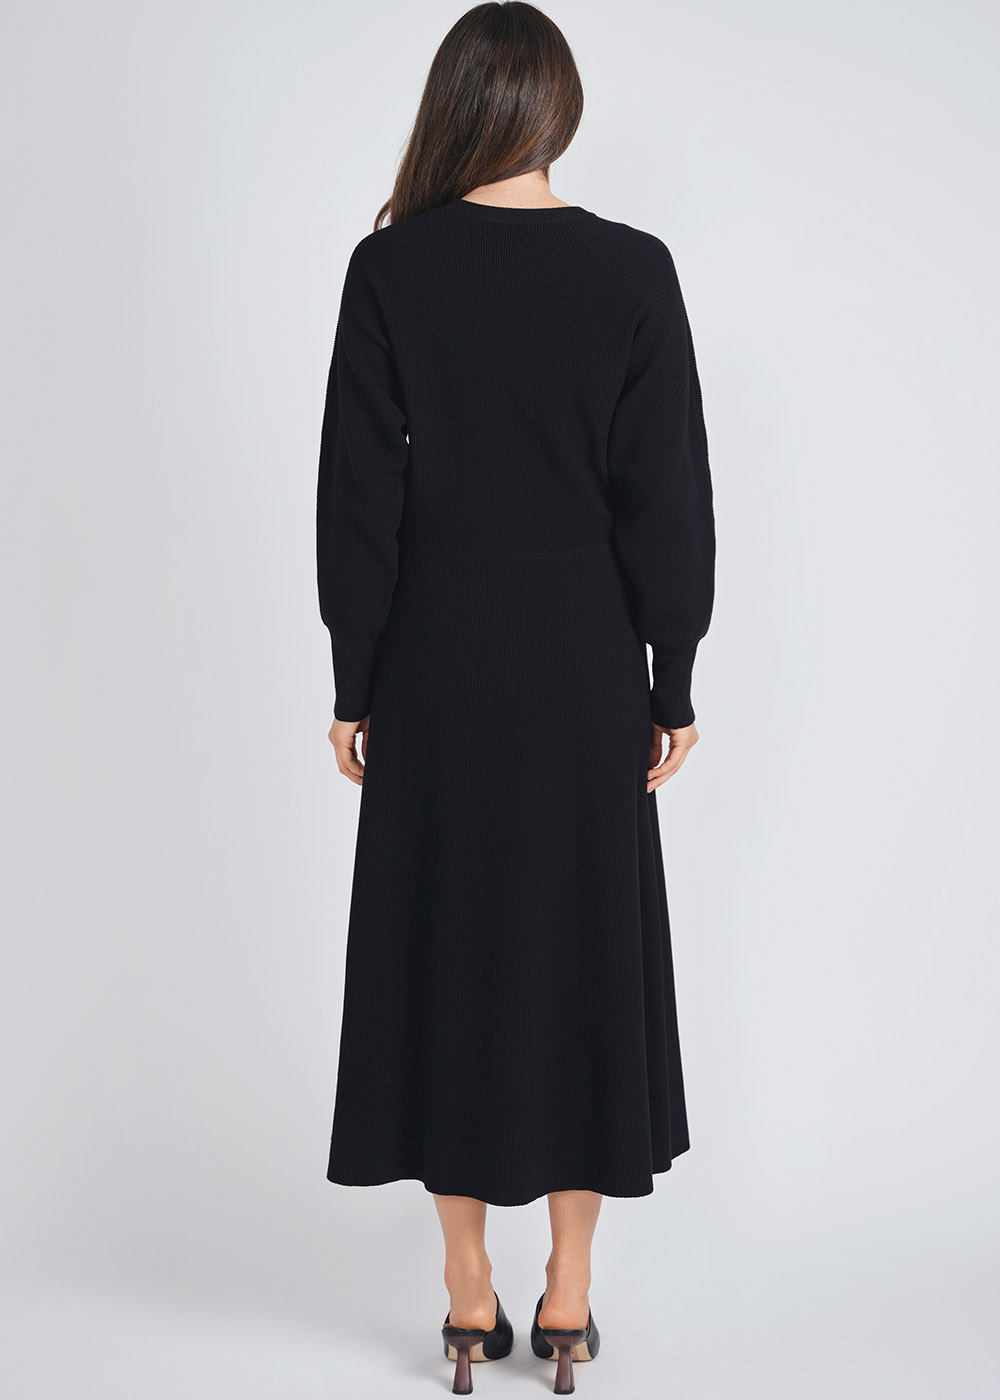 Sleek Black Dress in Ribbed Knit Design